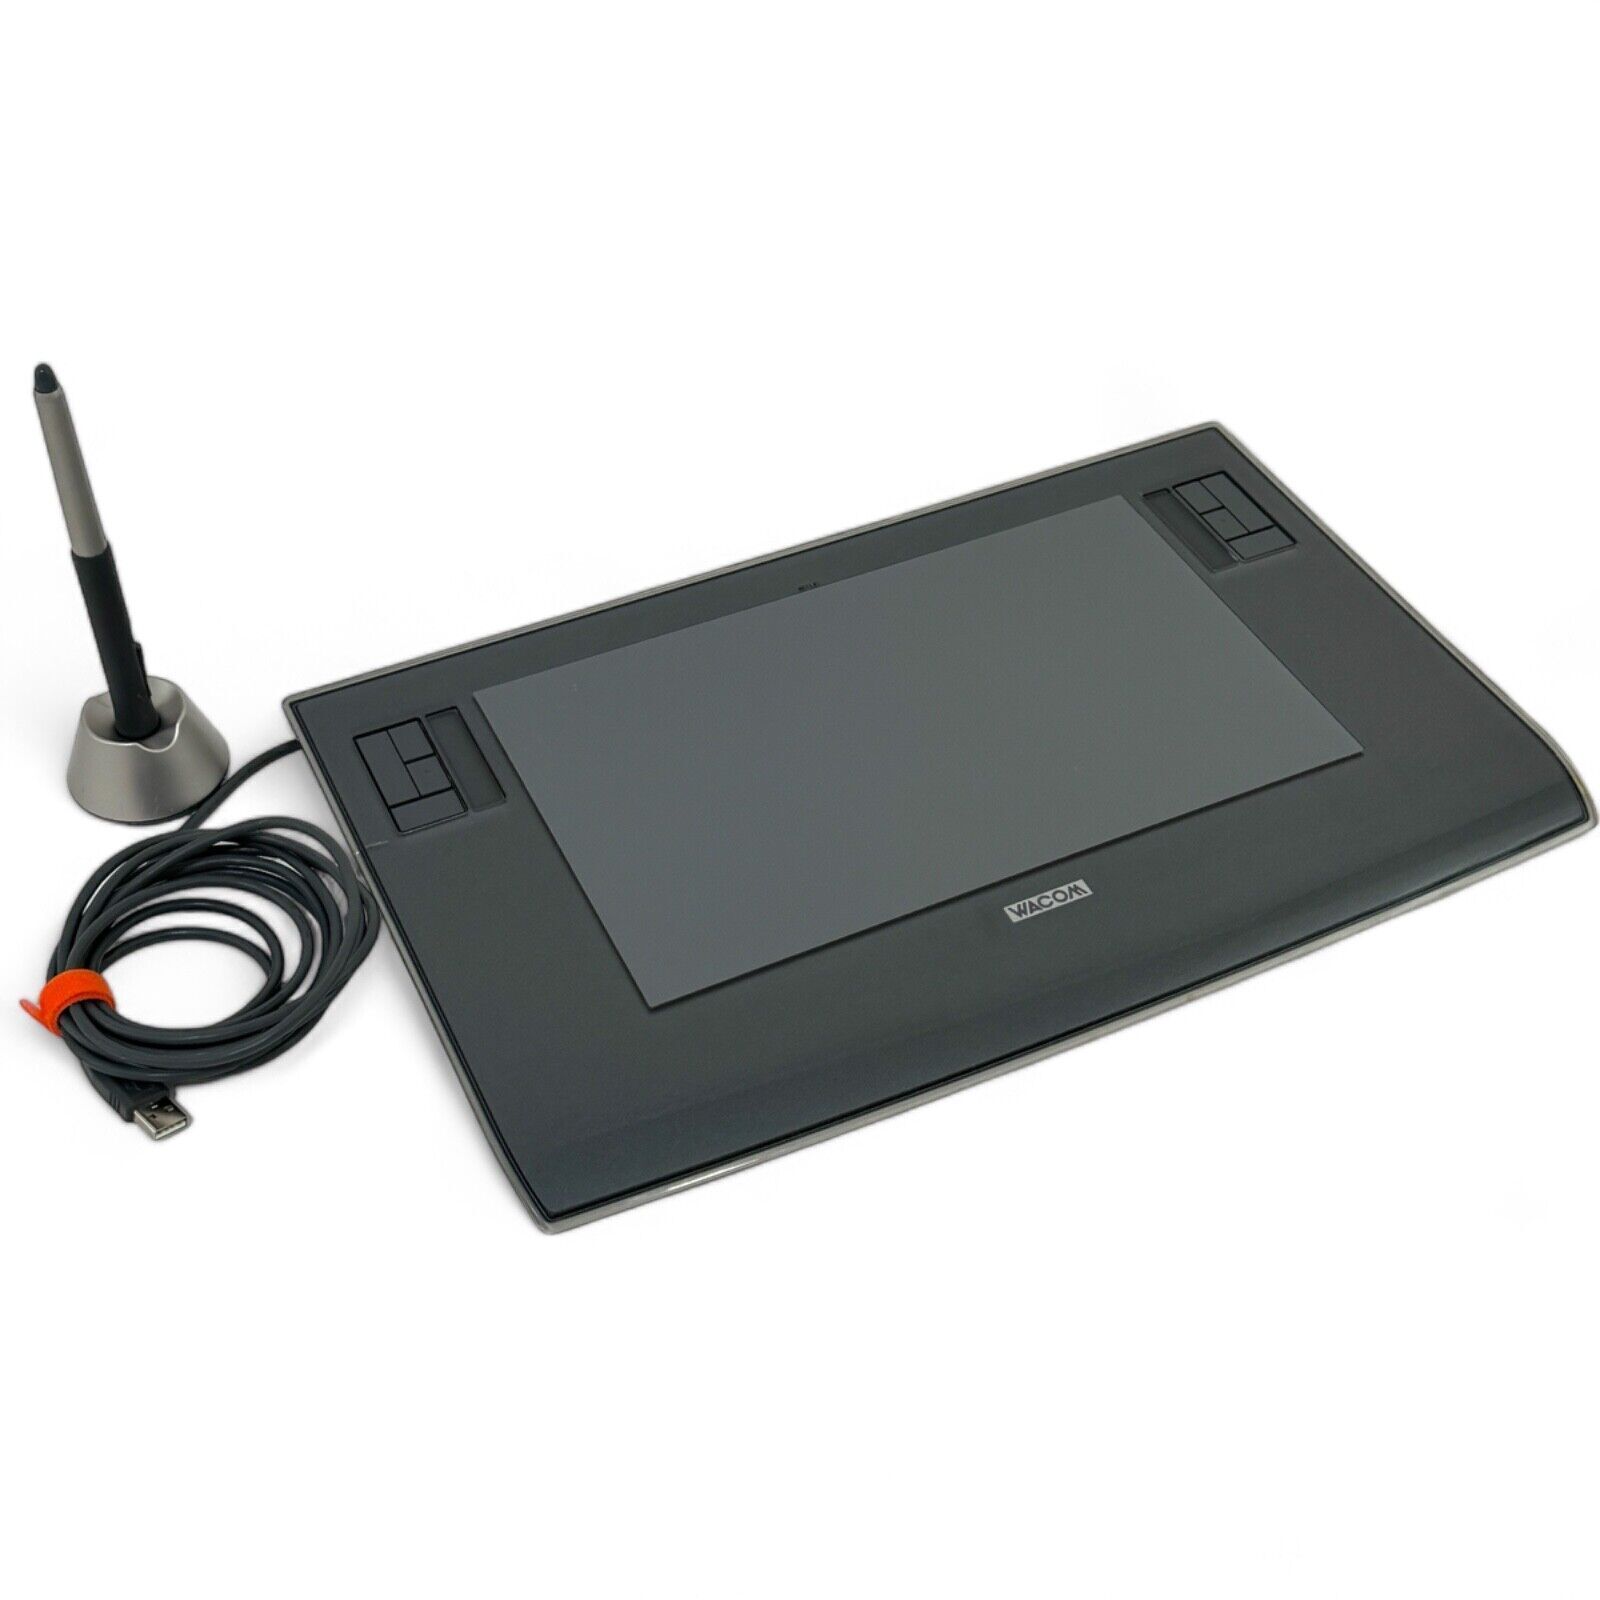 Wacom Intuos 3 Graphics Tablet Model PTZ-631W USB